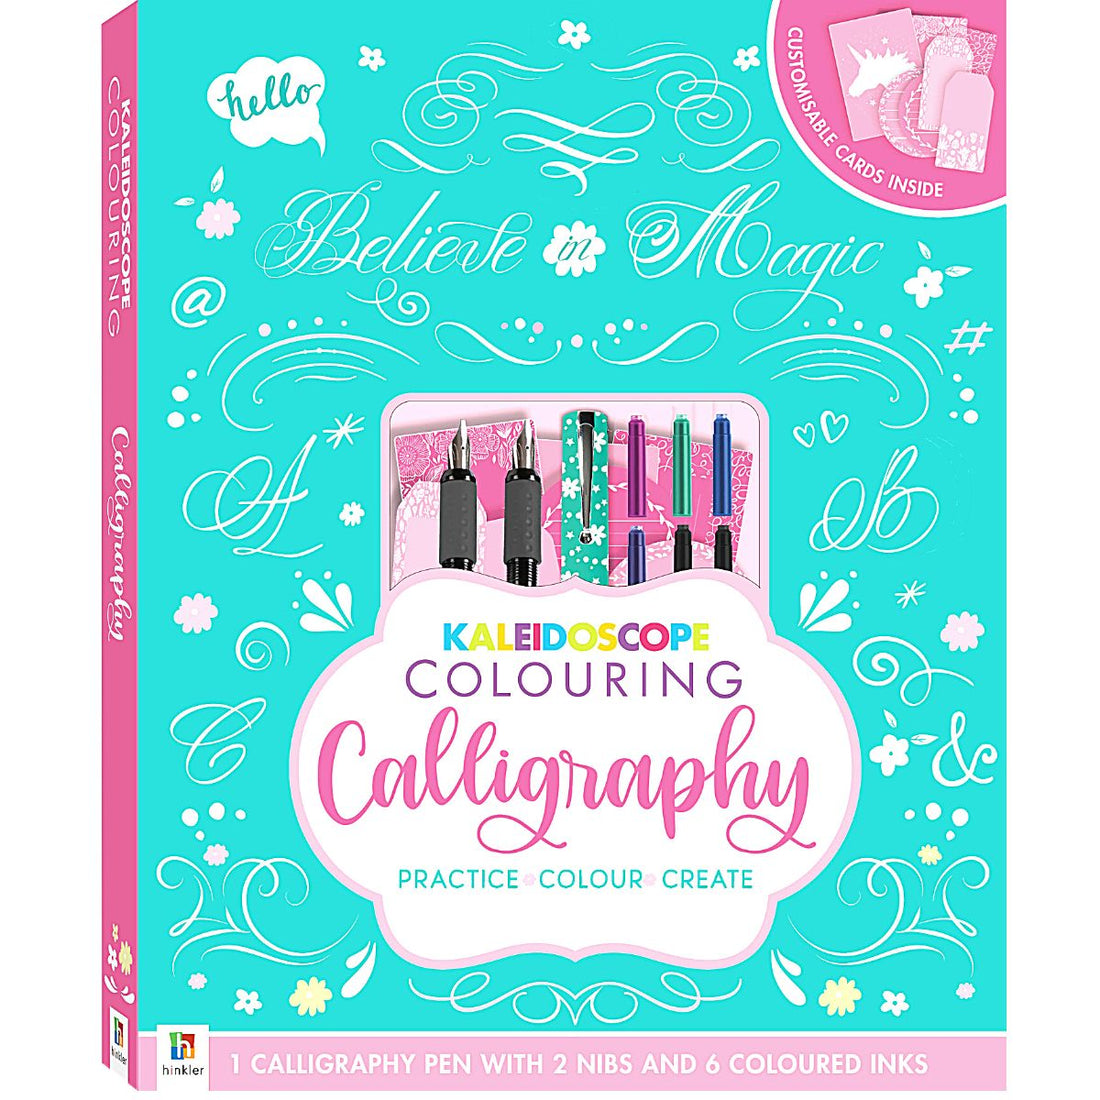 Kaleidoscope Colouring Calligraphy Kit